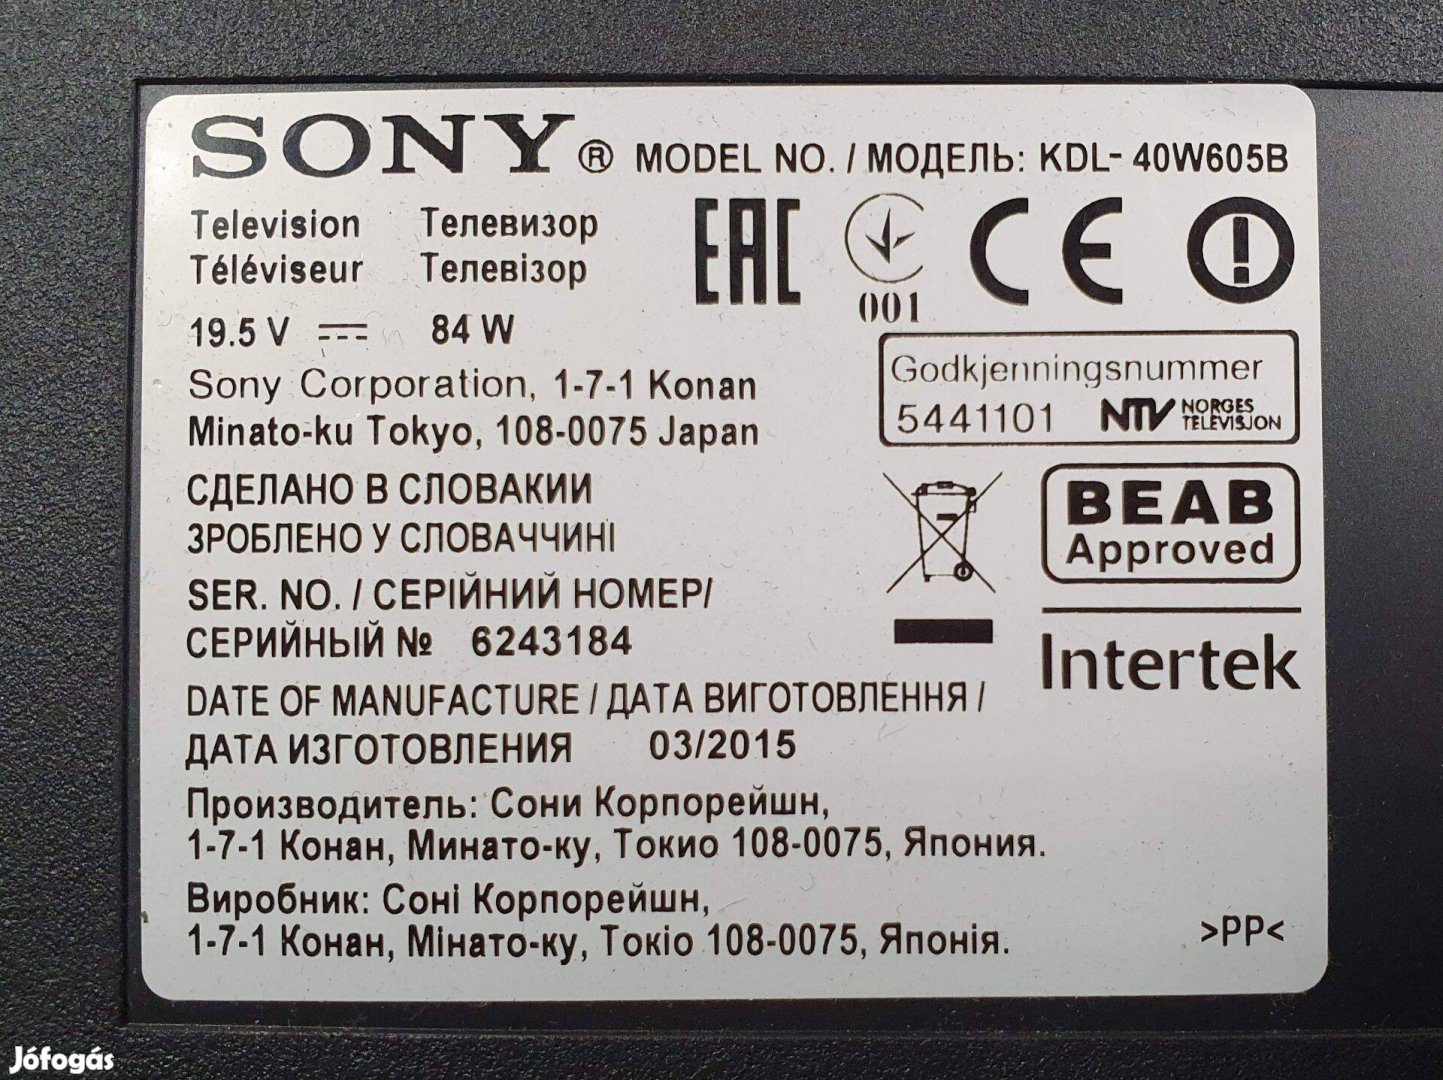 Sony Kdl-40W605B Full hd LED LCD tv panelek main hibás!